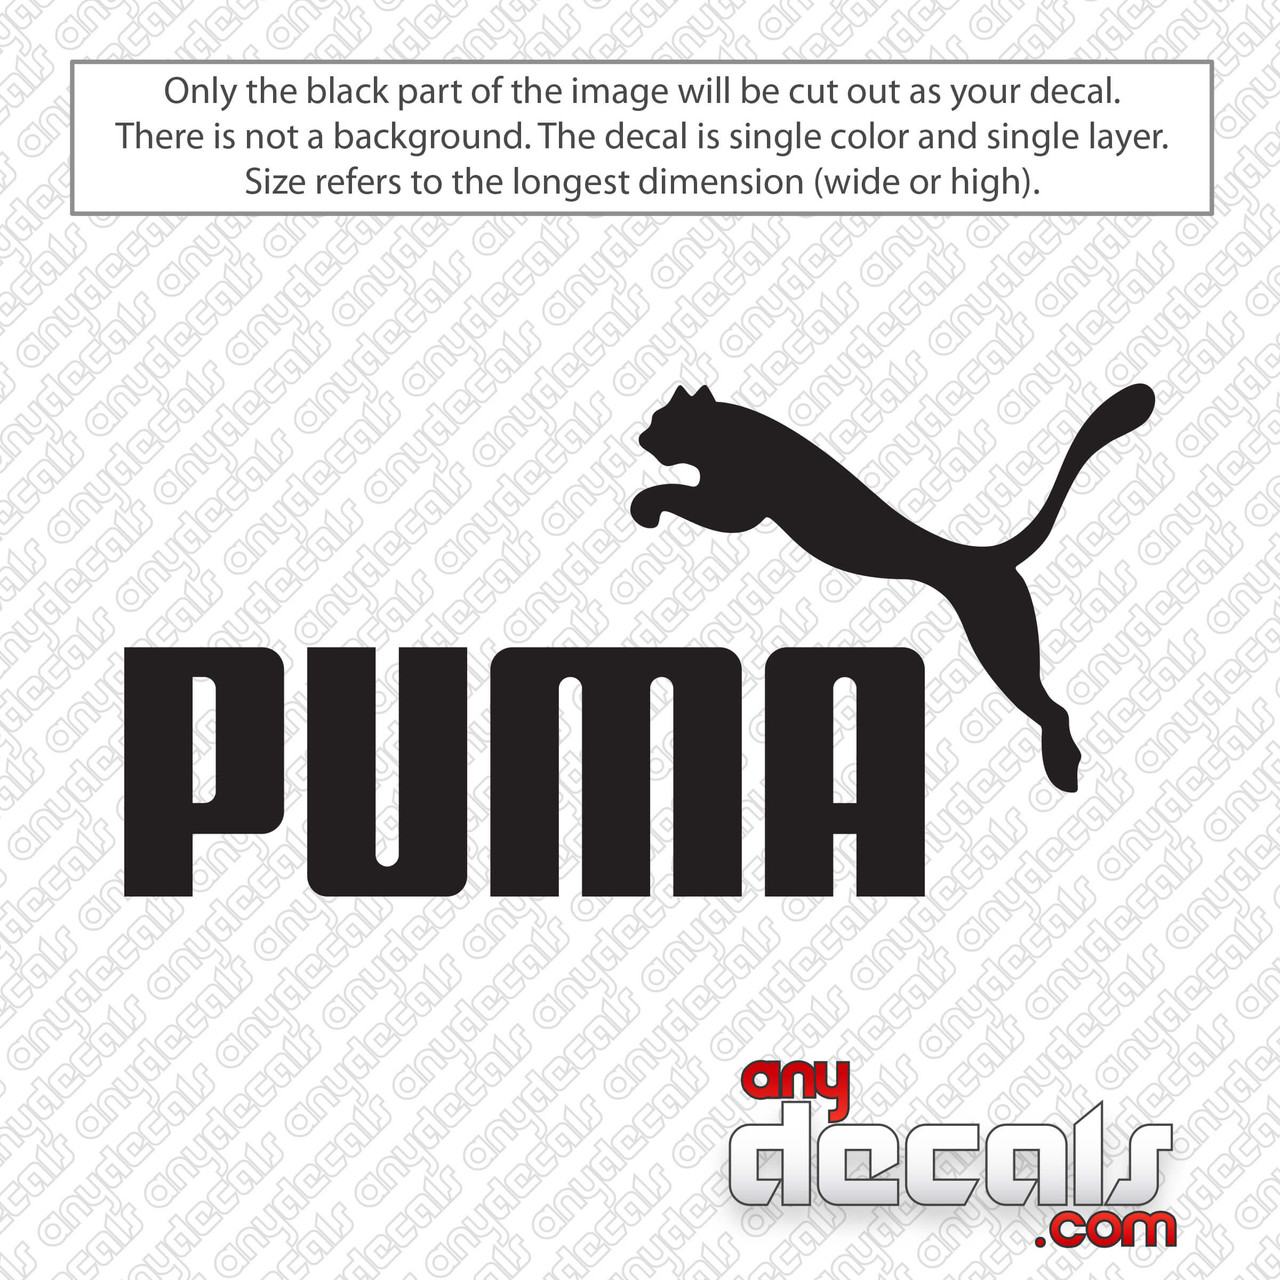 Fendi/Gucci/Louis Vuitton/Puma logo stickers used for press on